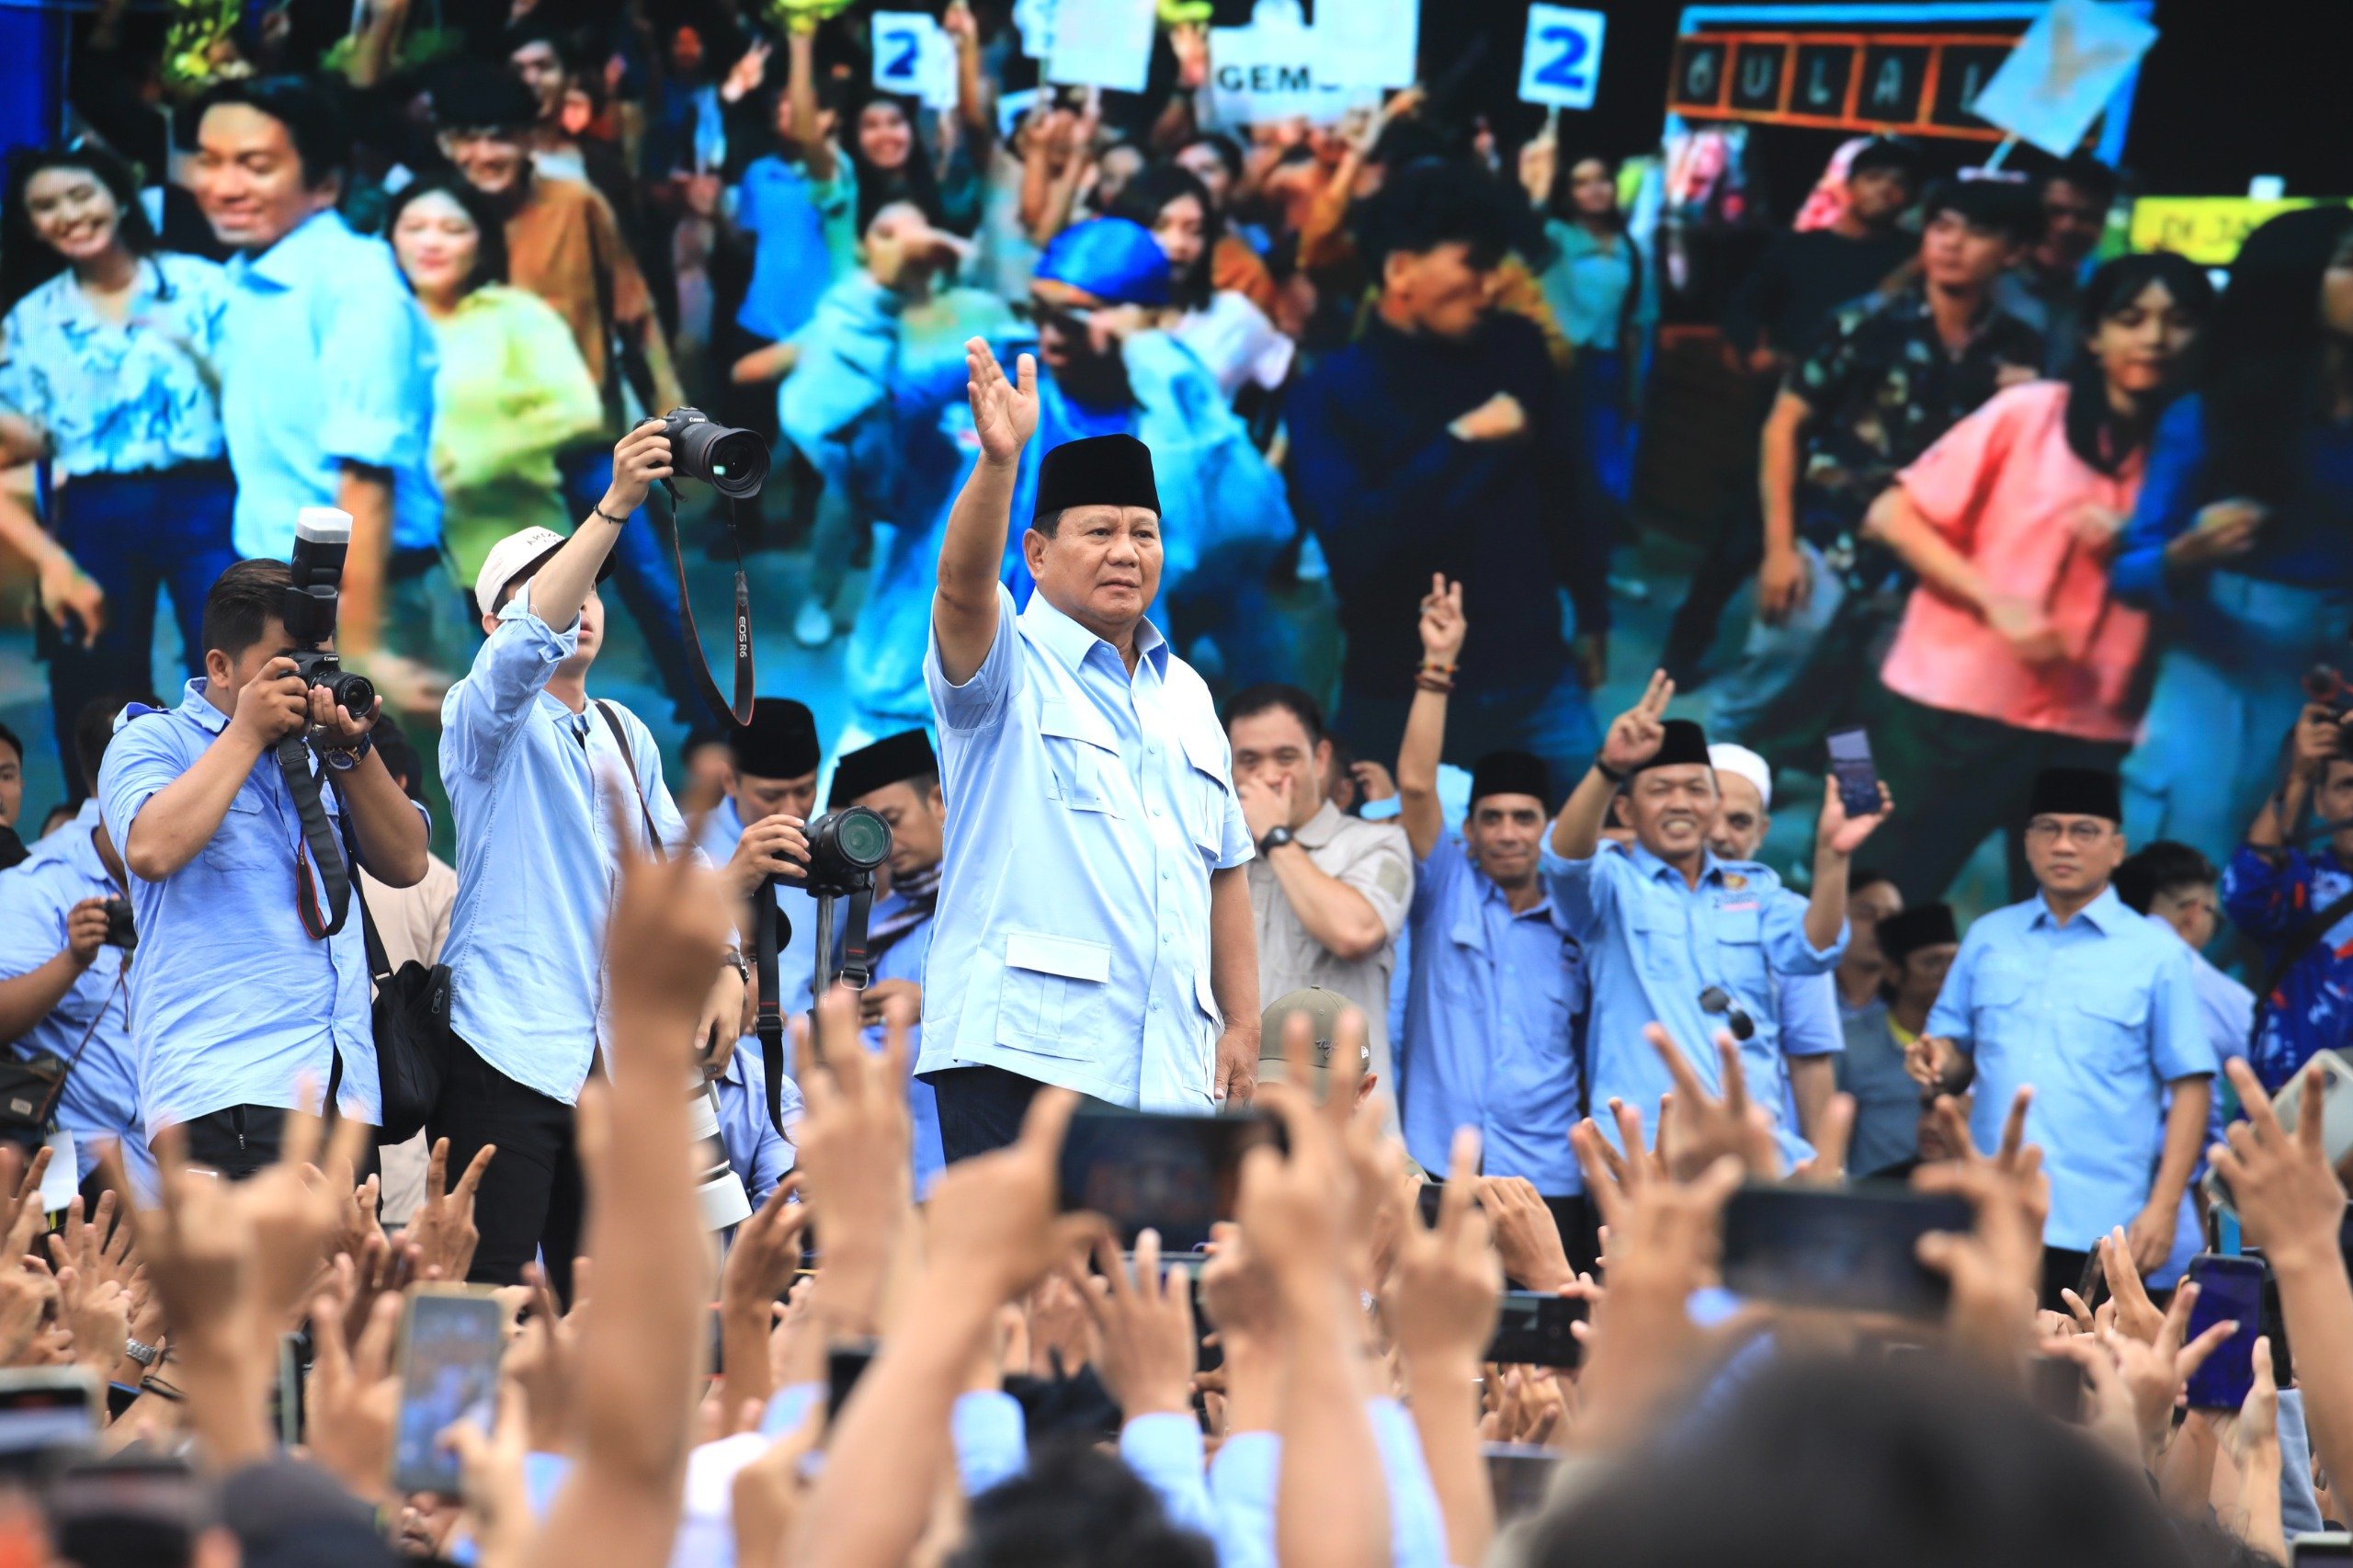 Calon presiden nomor urut 2, Prabowo Subianto (Sinpo.id/Tim Media)